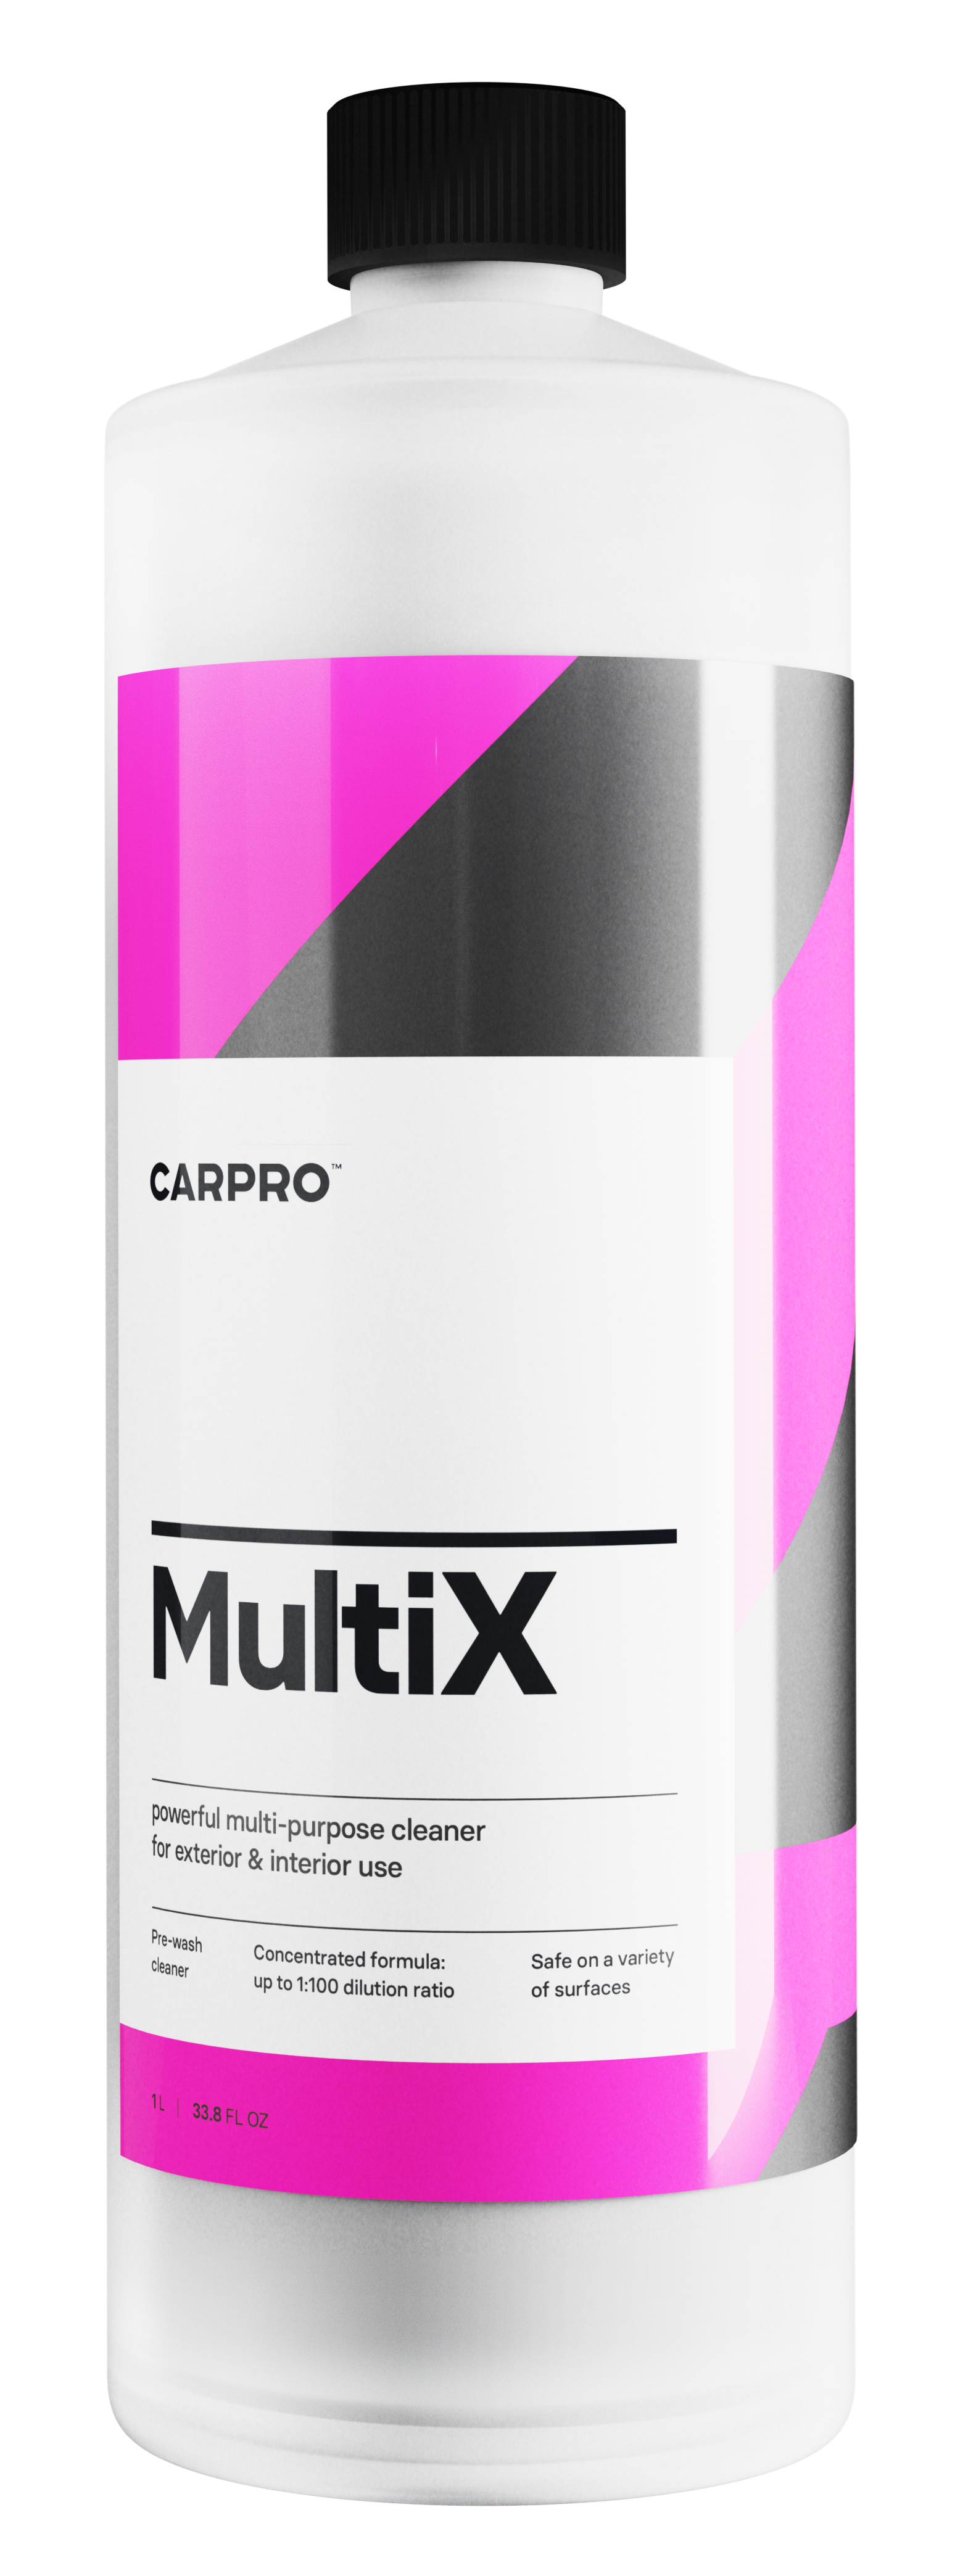 CARPRO MultiX 1L - Multi-purpose cleaner